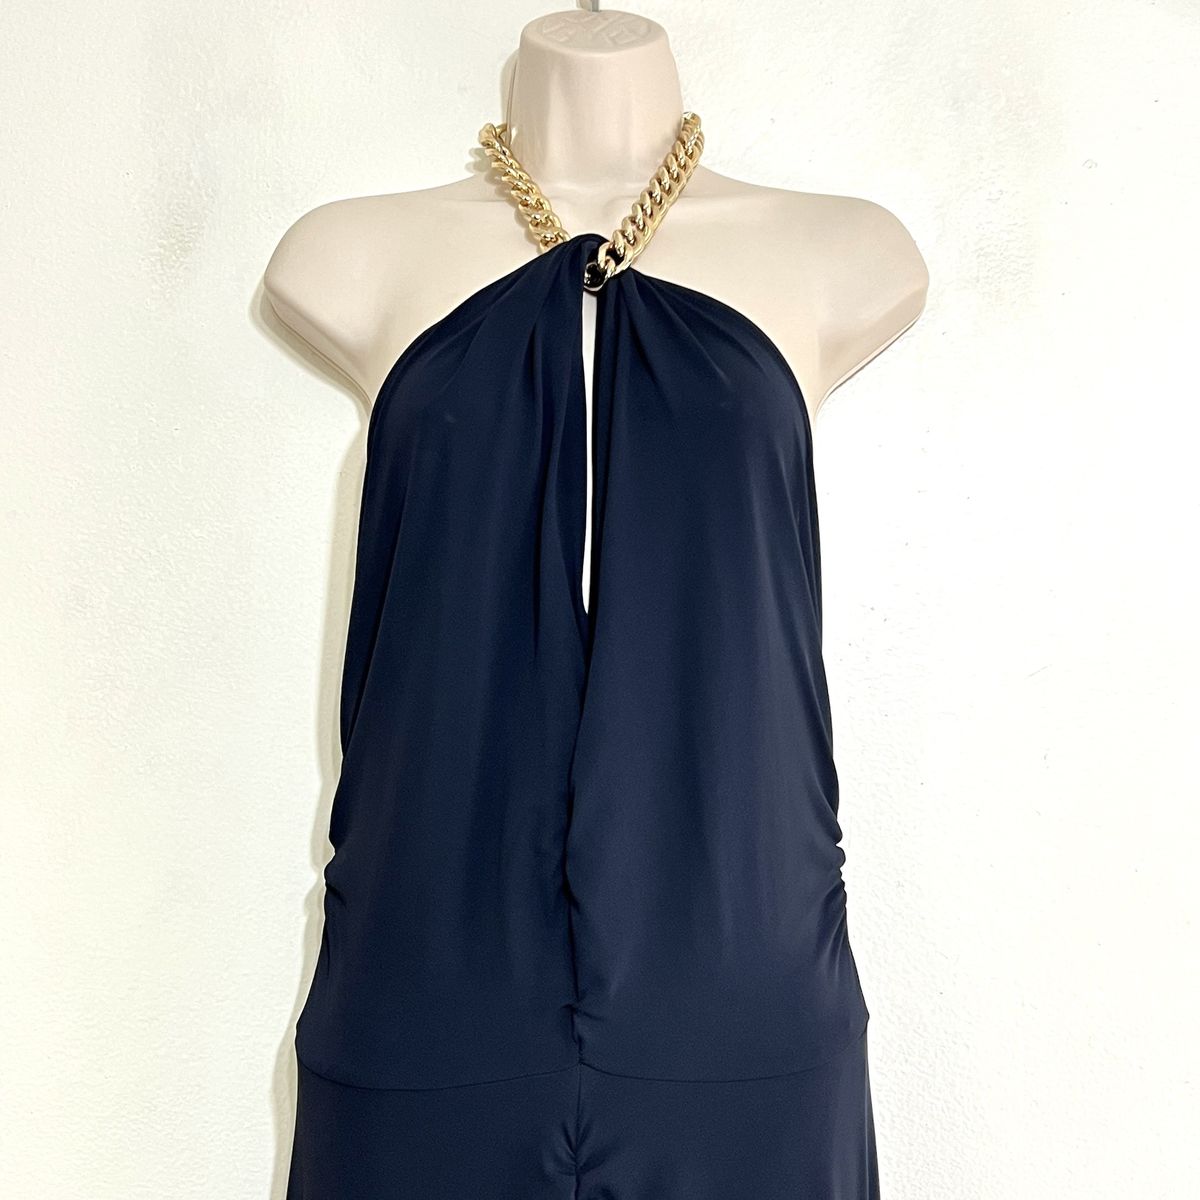 Style Reze Chain Link Veronica Beard Size 12 Halter Navy Blue Side Slit Dress on Queenly